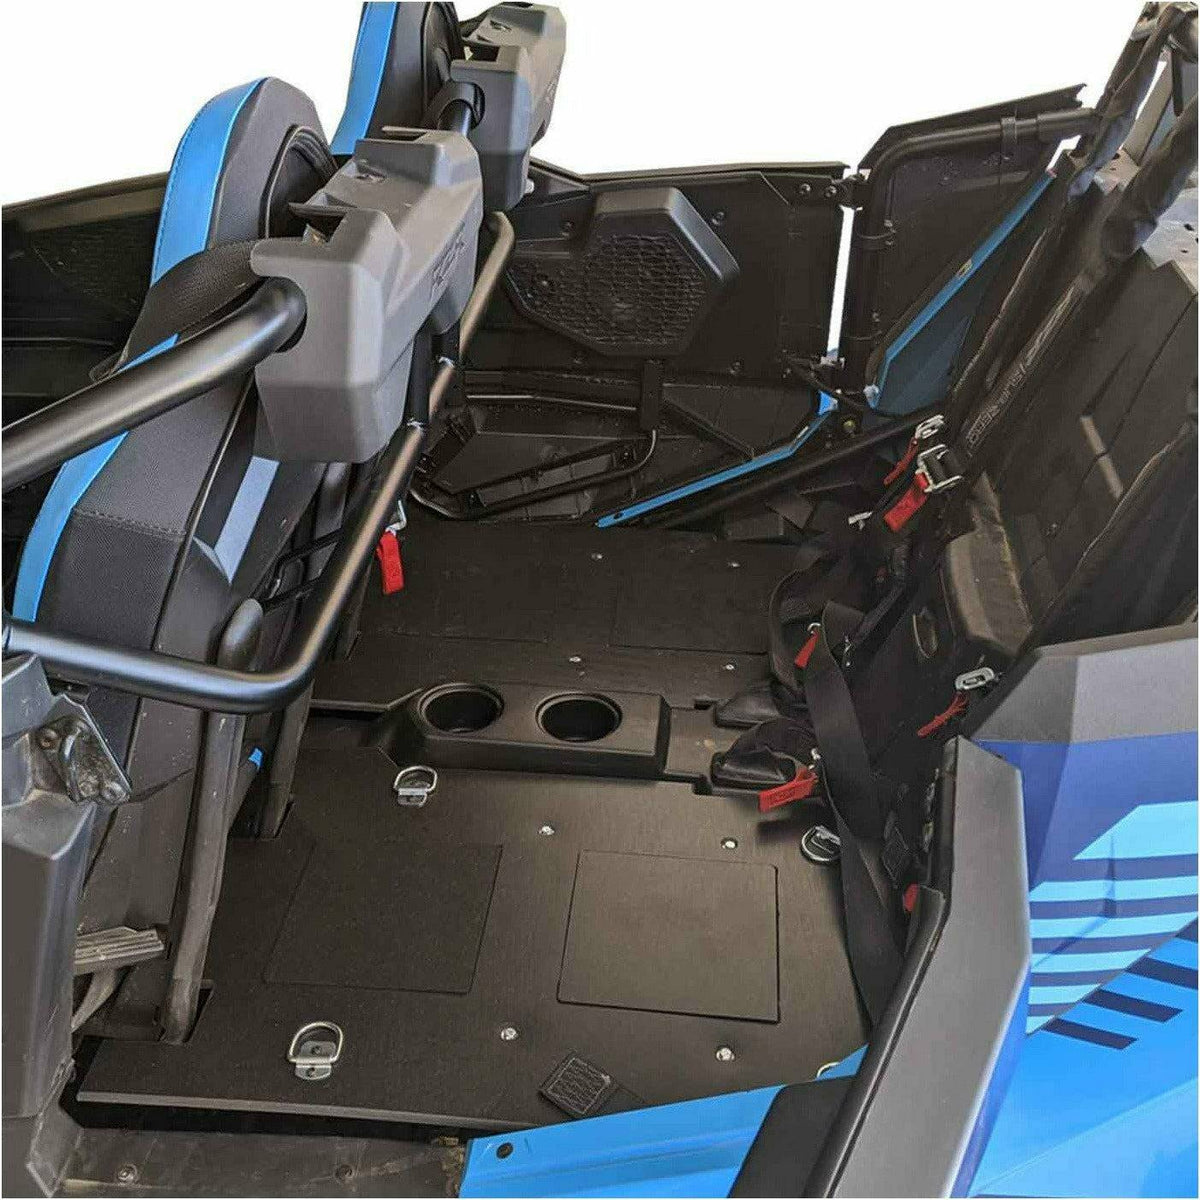 SSS Off-Road Cargo Rack / Dog Seat - Back Seat Conversion Kit for Polaris RZR XP 4 Turbo S